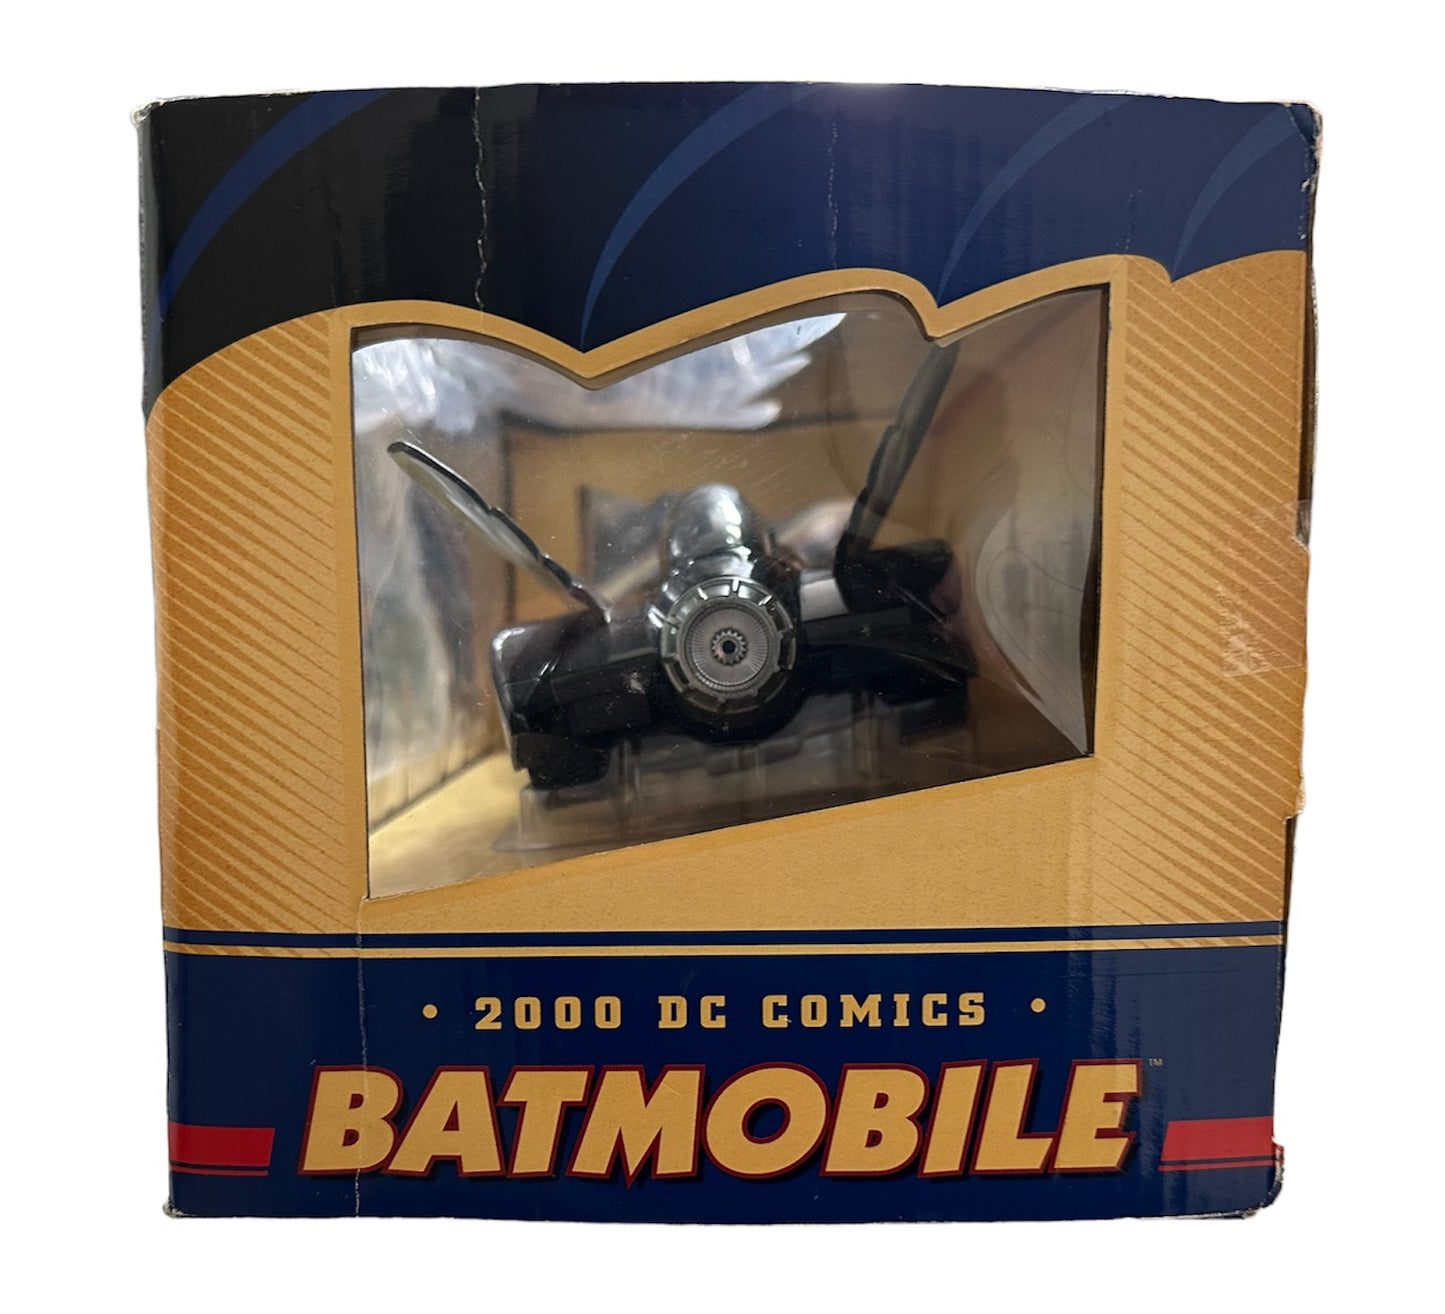 Vintage Corgi 2005 Batman 2000 DC Comics The Batmobile 1/18 Scale Die-Cast Metal Replica Model Vehicle - Brand New Factory Sealed Shop Stock Room Find.